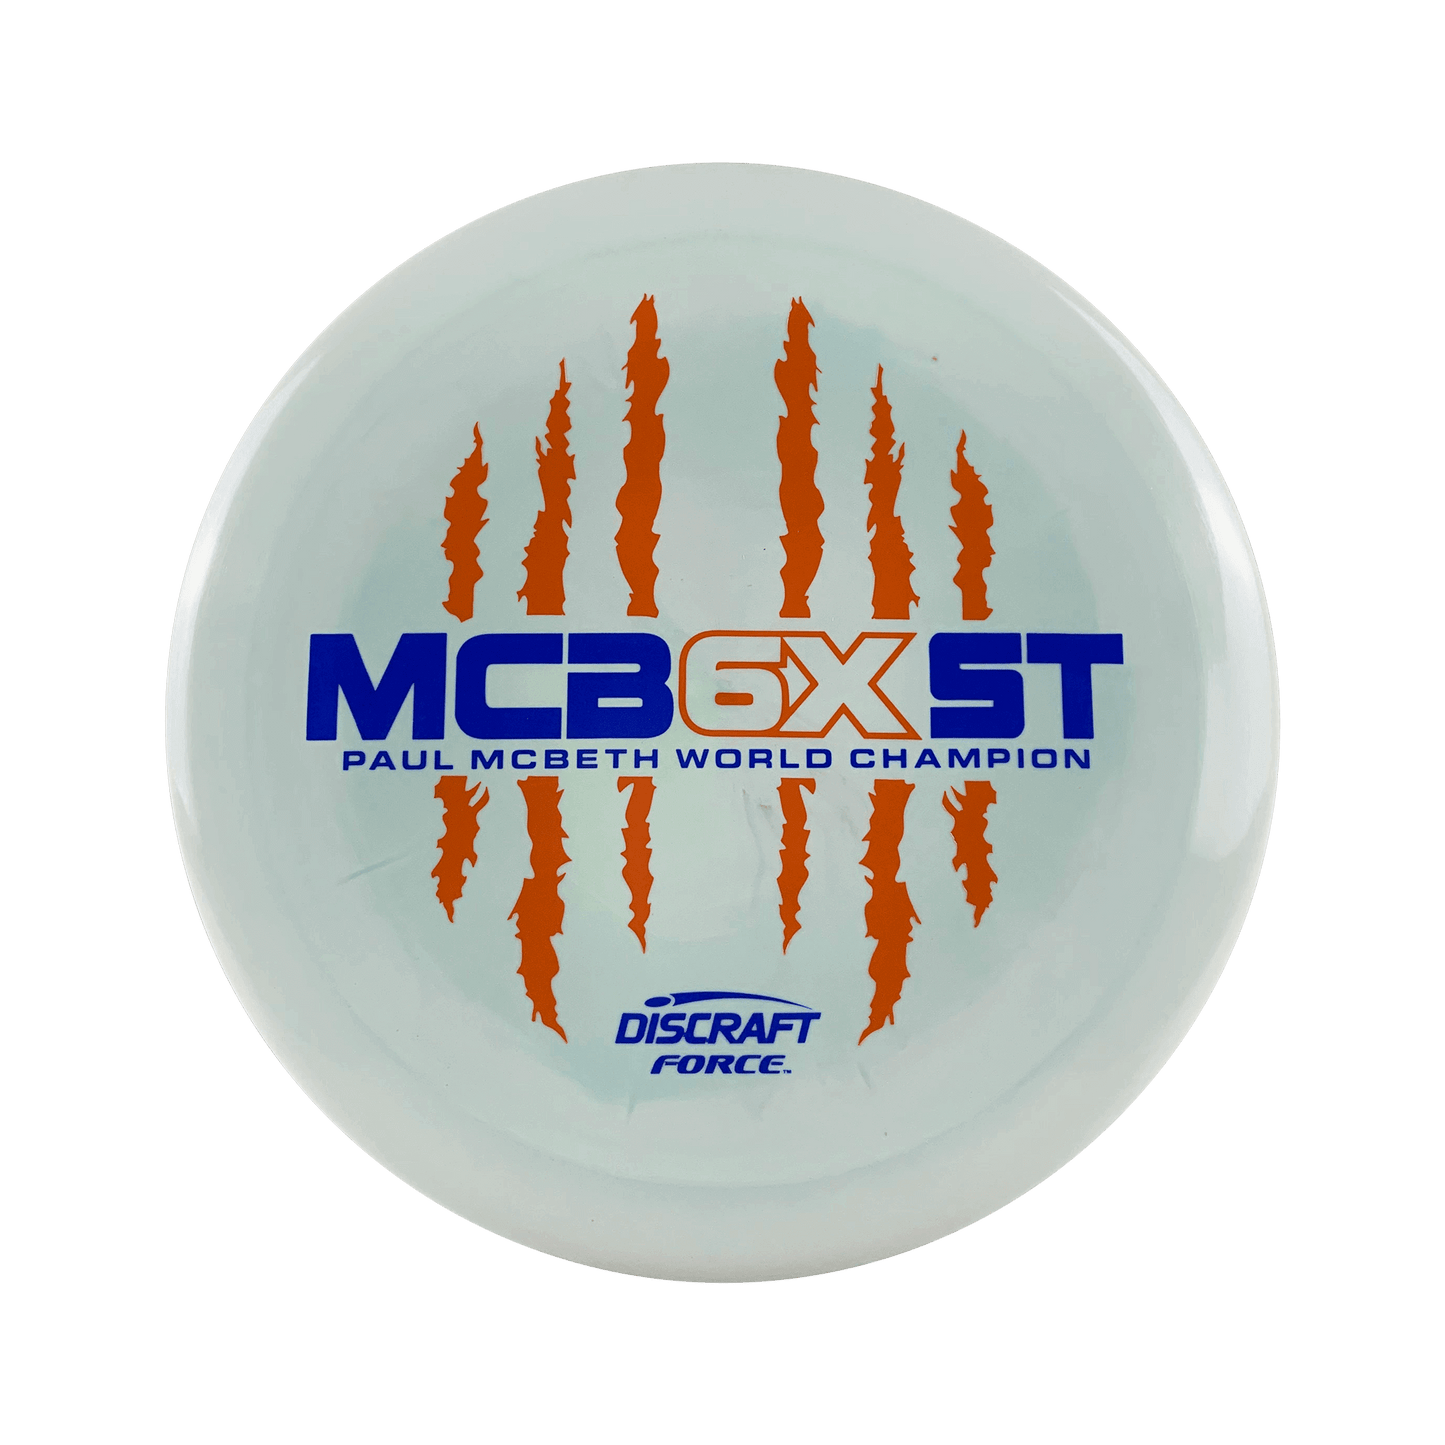 ESP Force - Paul McBeth 6x Claw Disc Discraft multi / white green 173 